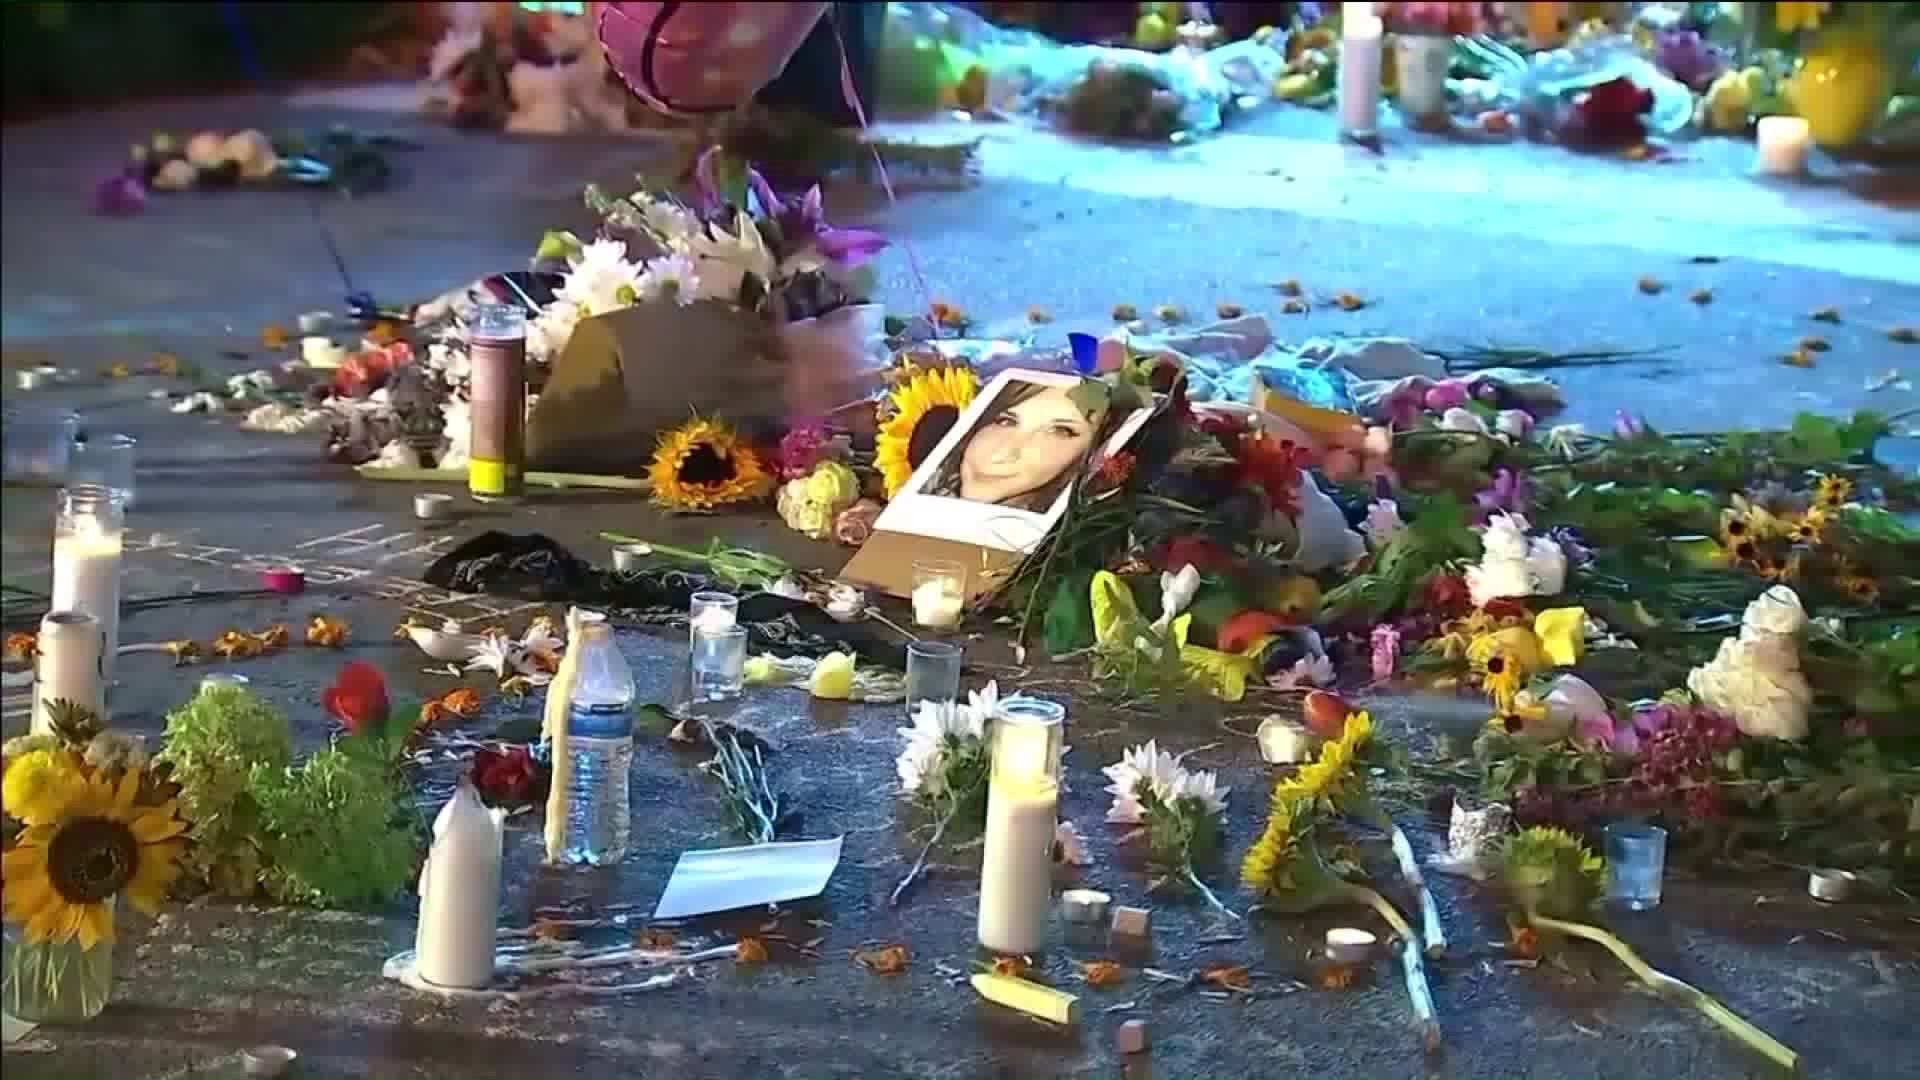 As Trump talks again, Charlottesville mourns